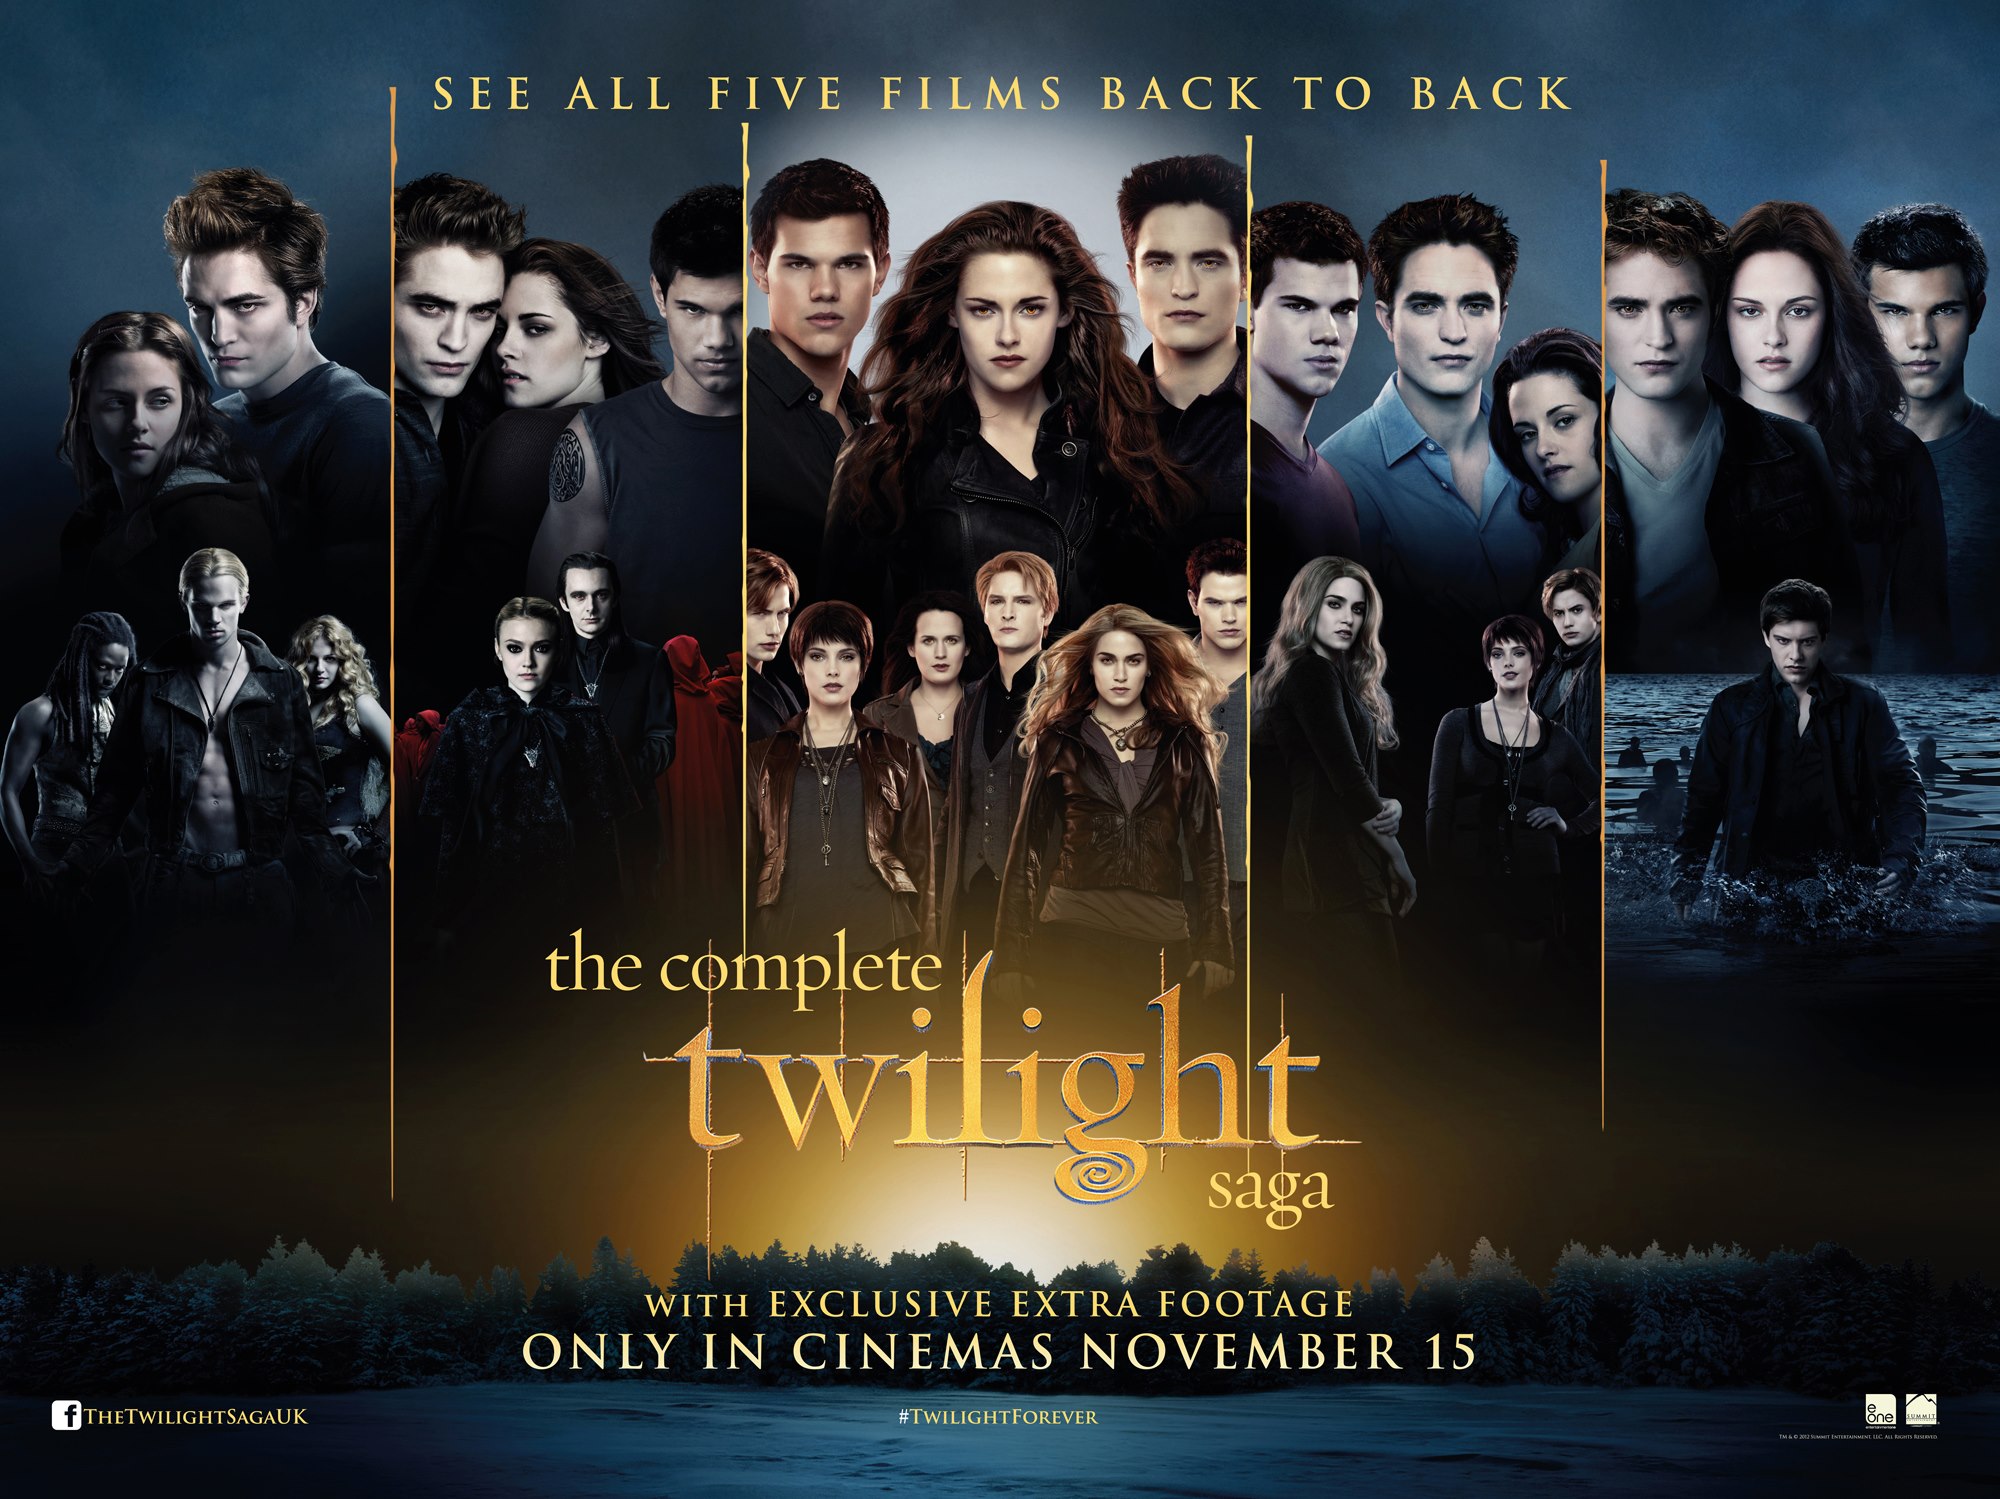 The-Complete-Twilight-Saga-Poster.jpg